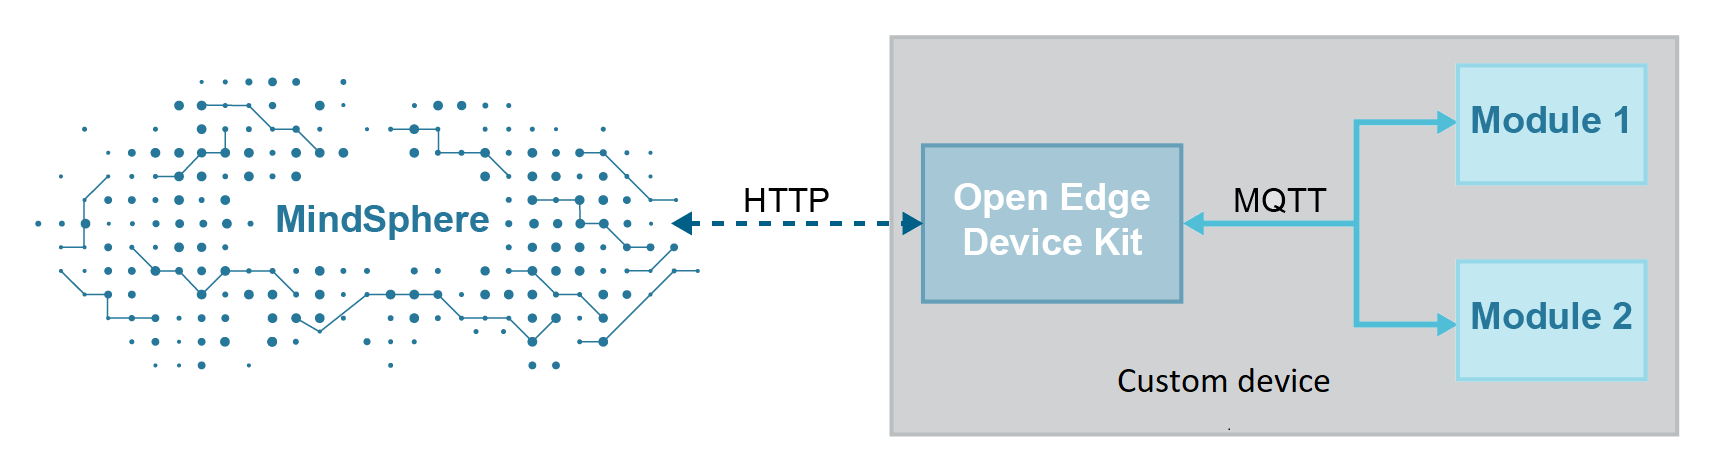 Open Edge Device Kit 架构